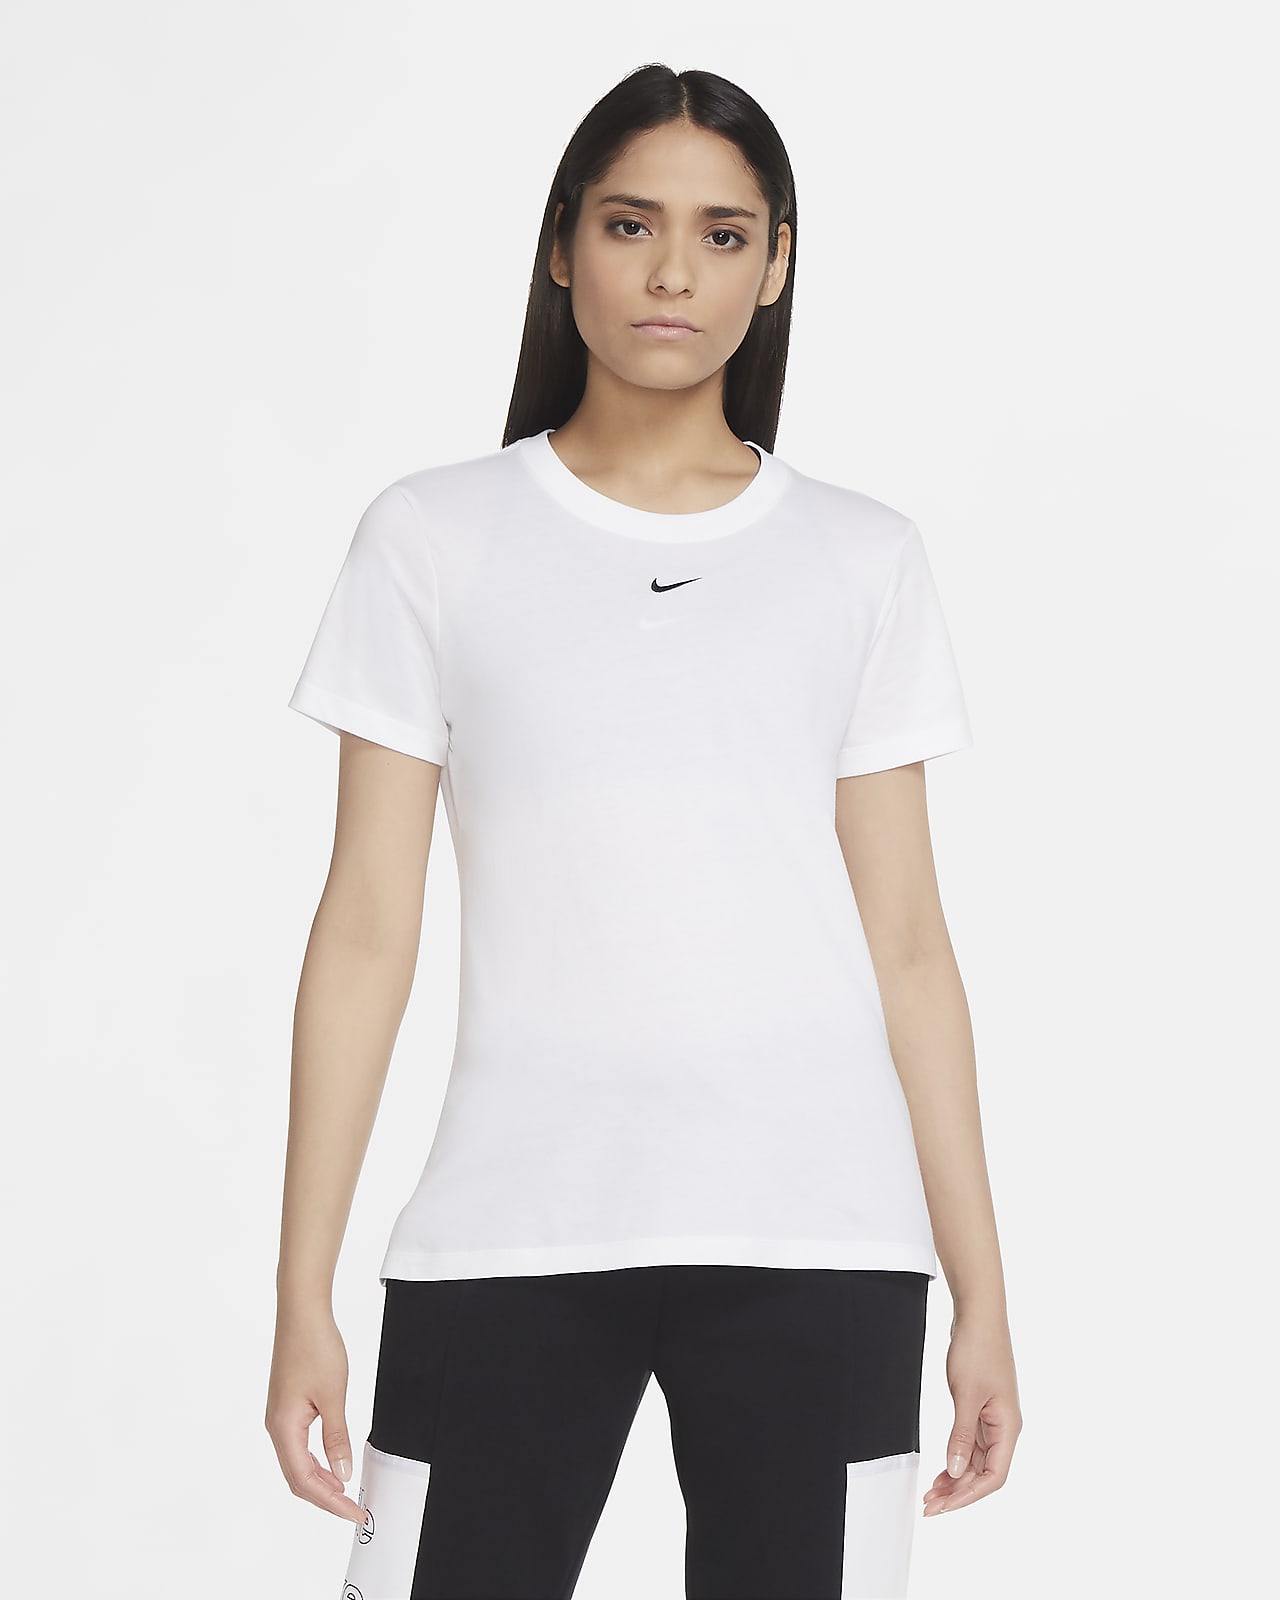 Arthur Verwacht het toezicht houden op Nike Sportswear T-shirt voor dames. Nike NL